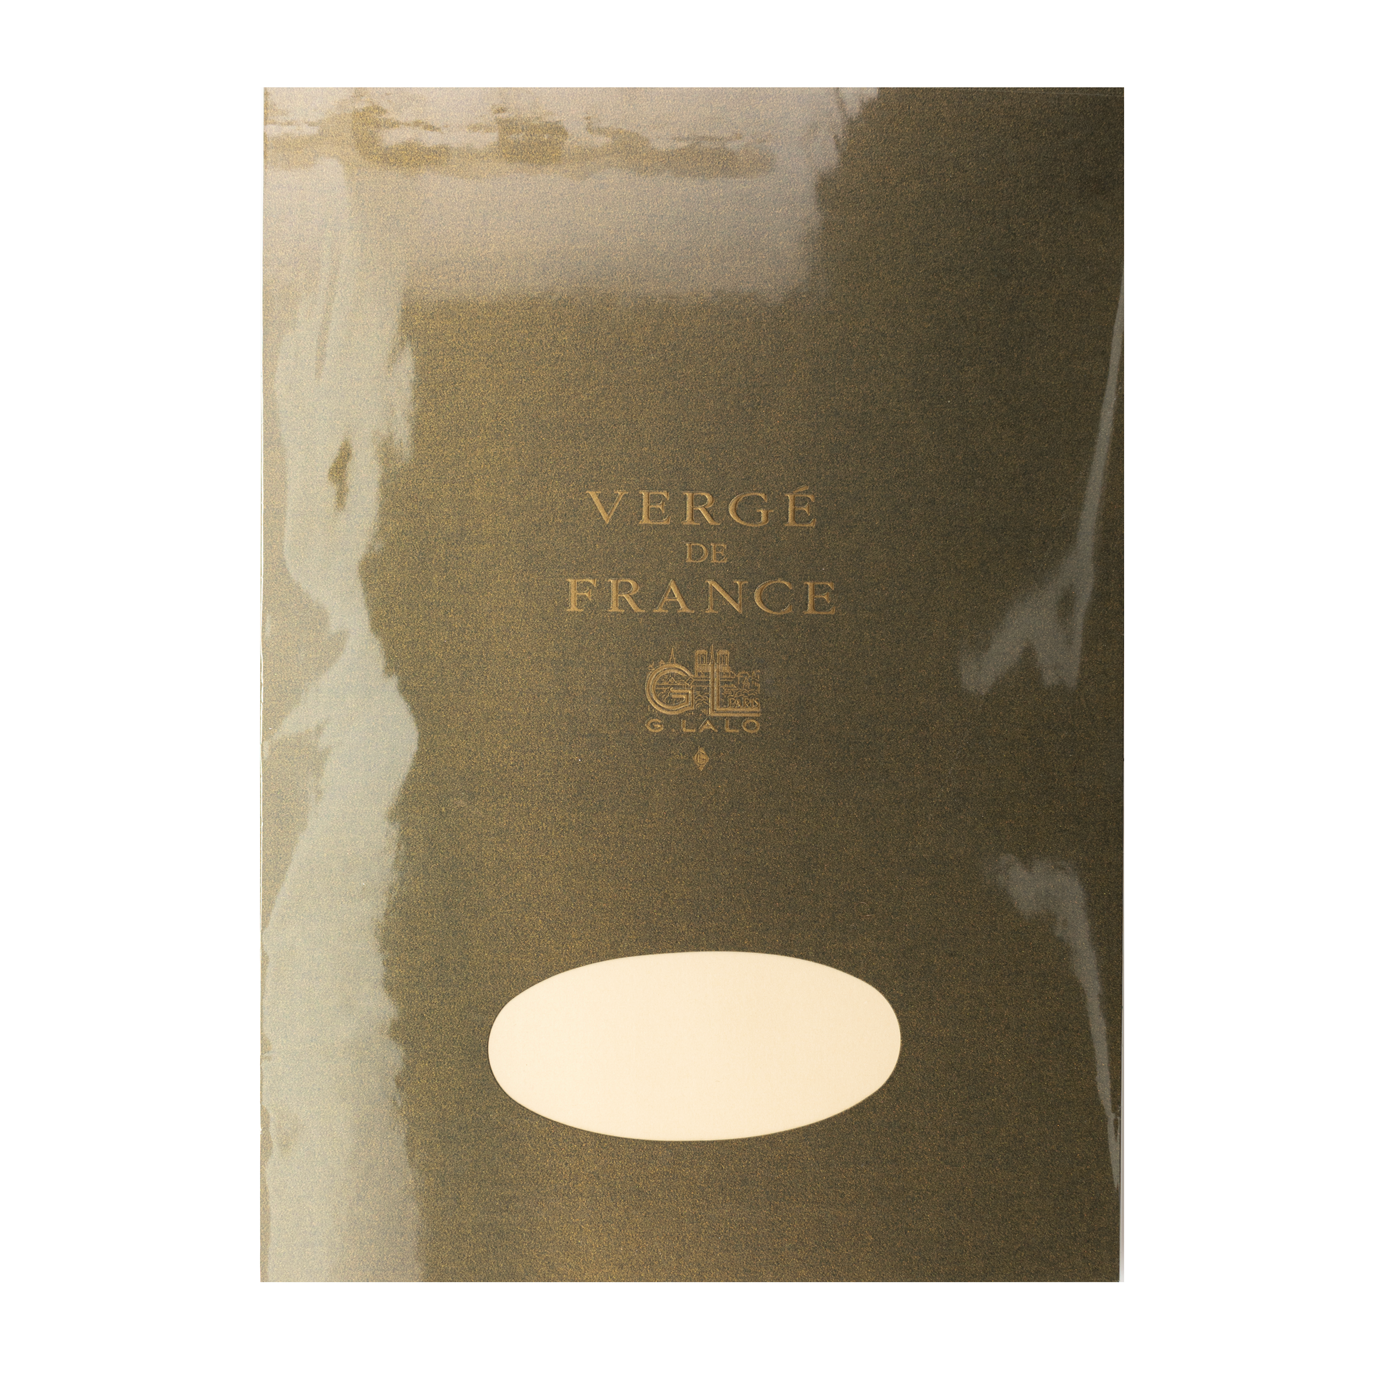 G. Lalo Verge de France 8.25" x 11.75" Large Pad - Champagne